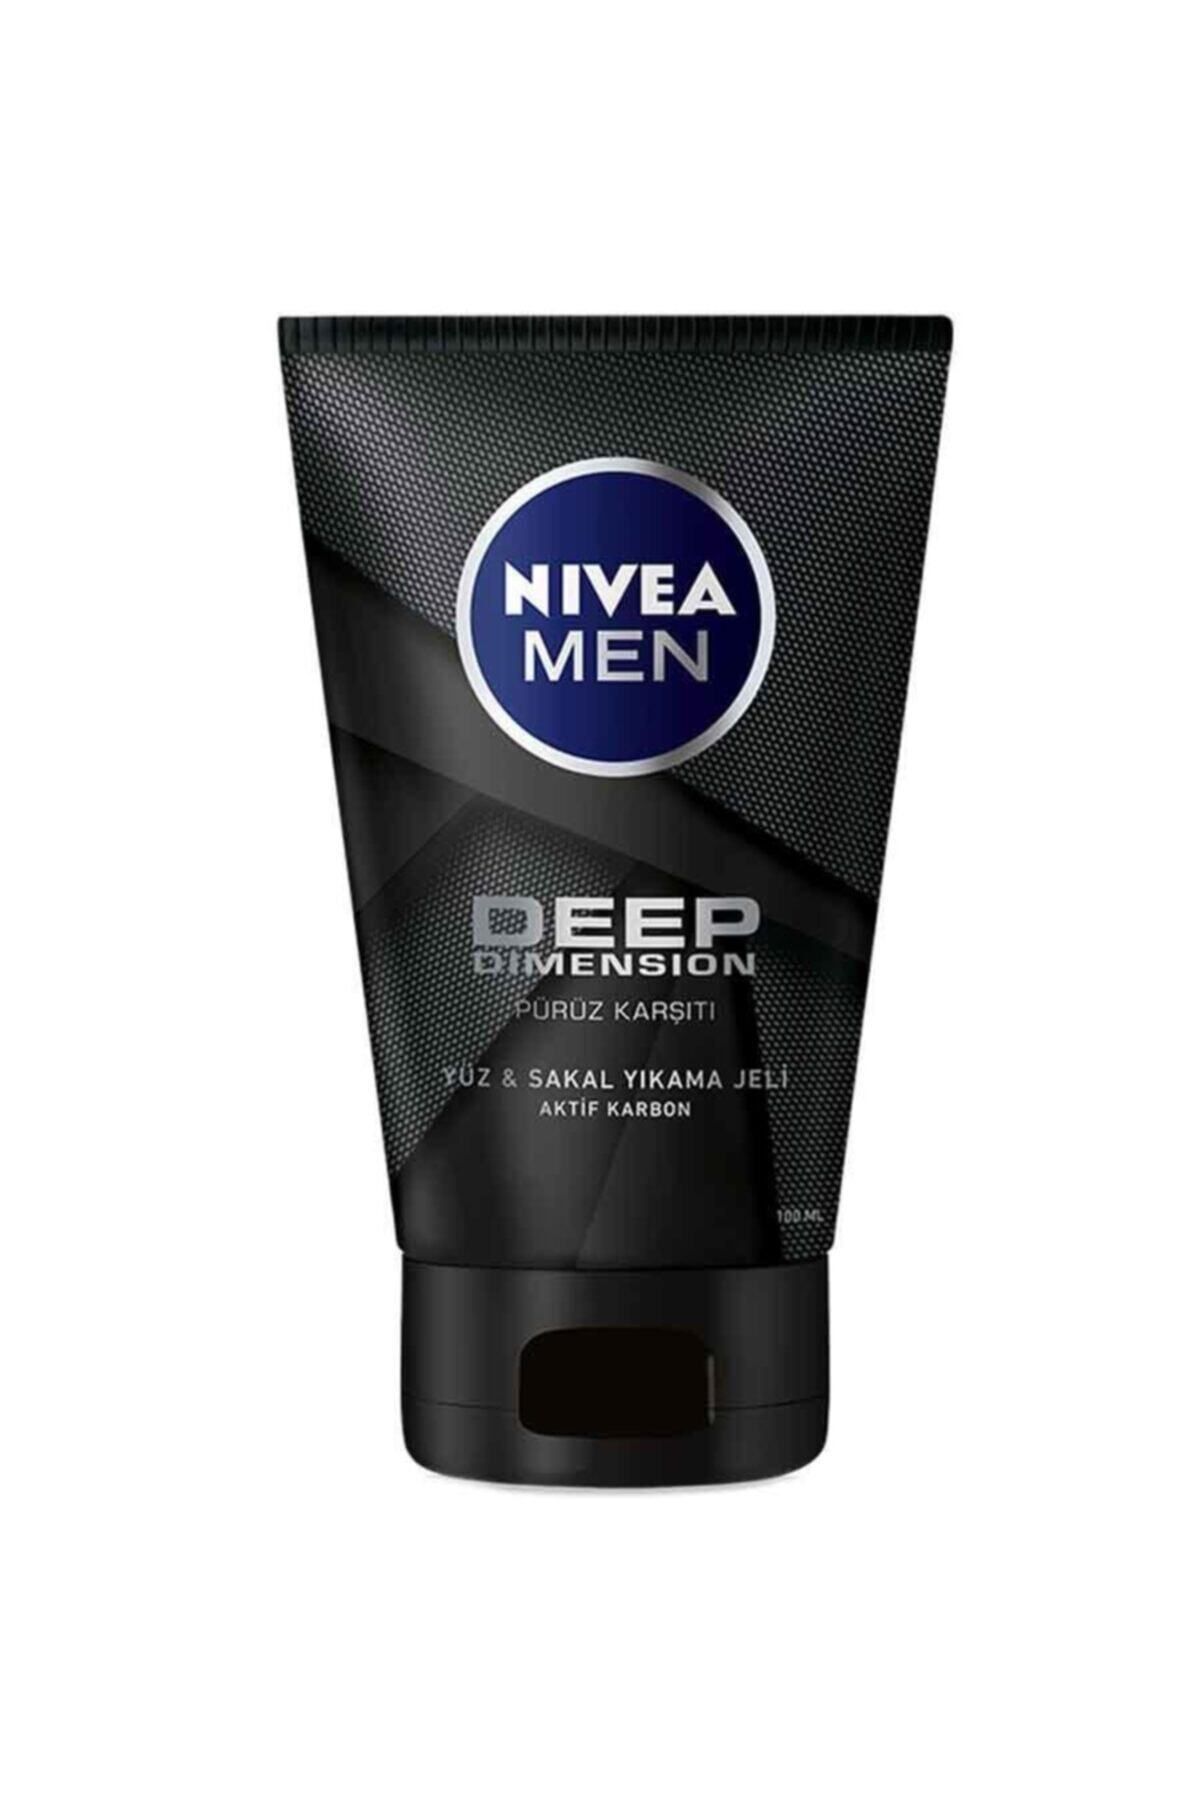 NIVEA ژل تمیزکننده صورت و صابون مایع عمیق مردانه 100 میلی لیتر